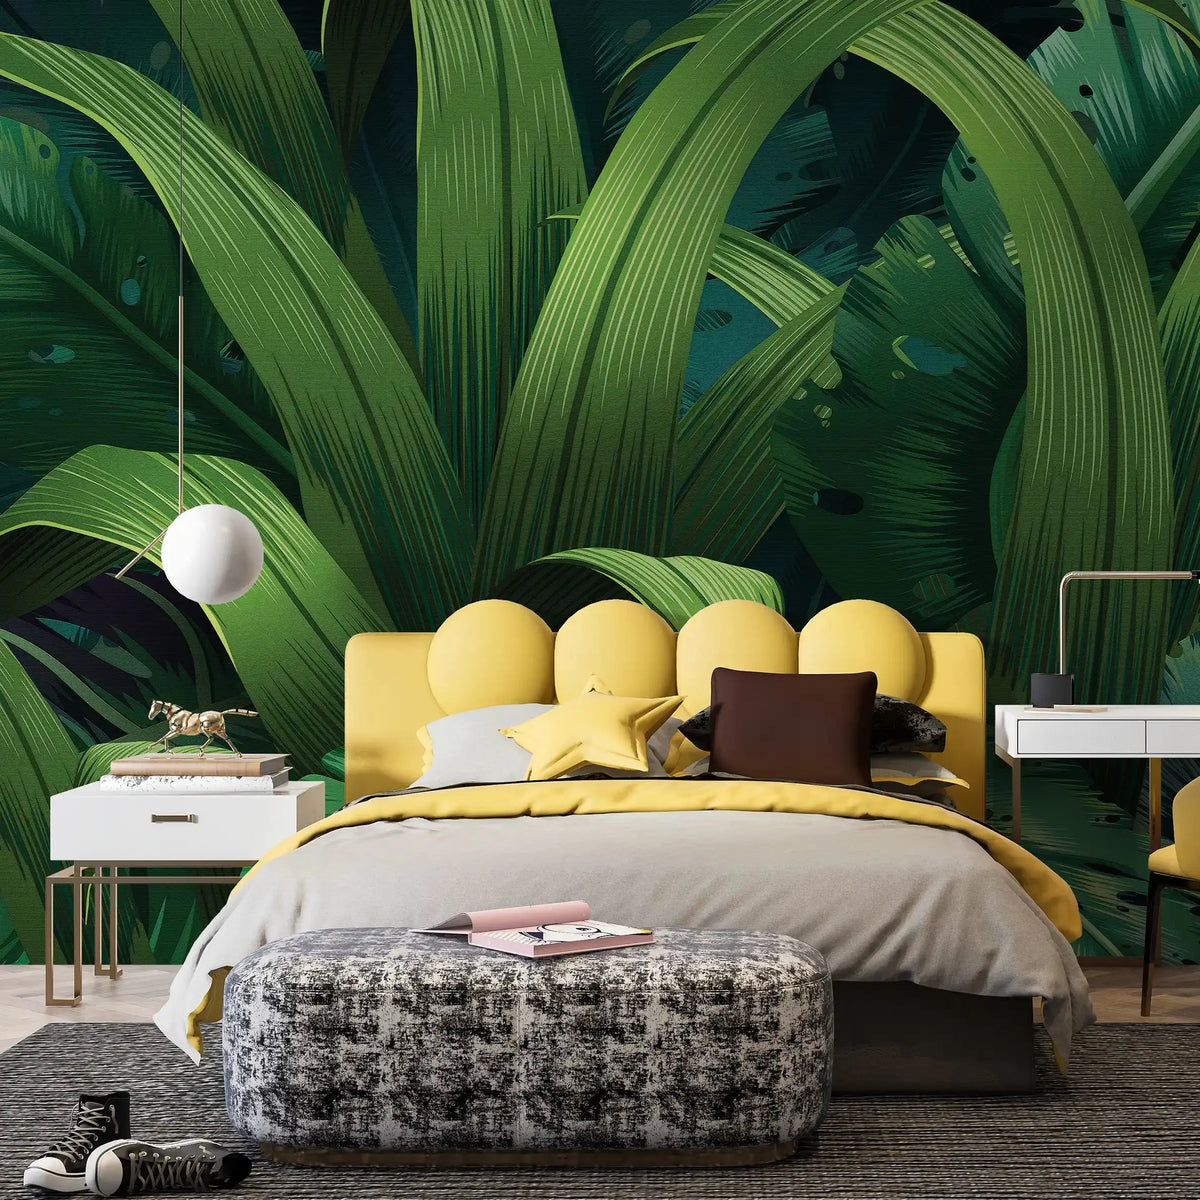 3049-A / Green Jungle Peel and Stick Mural - Temporary Wallpaper, Tropical Rainforest, Easy Install Wallpaper for Wall Decor, DIY Decor, and Room Decor - Artevella